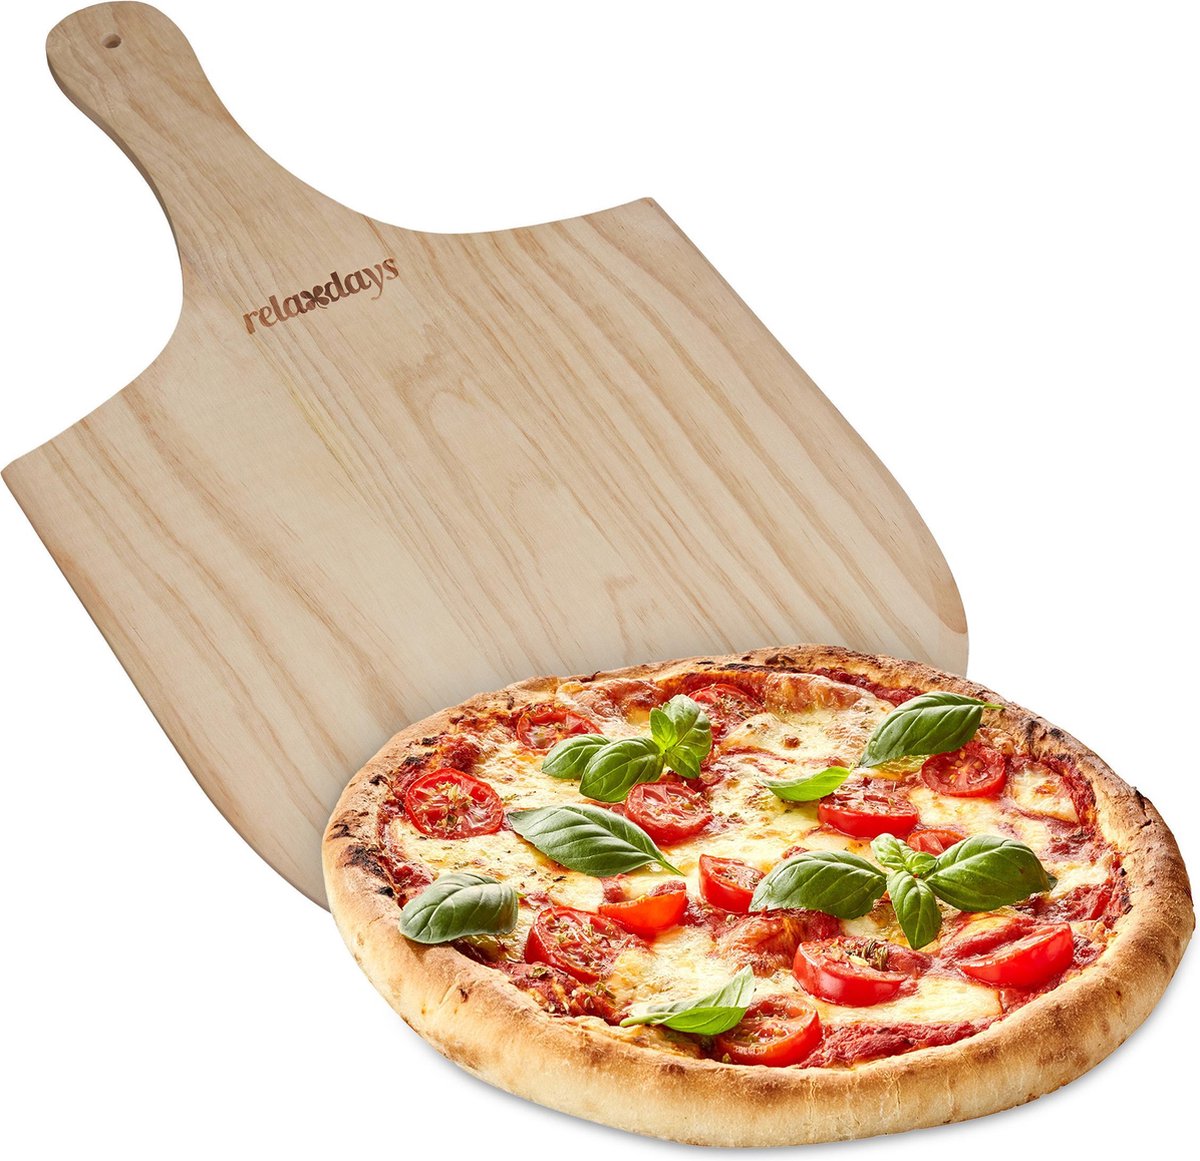 cuillère à pizza relaxdays XXL, bois, cuillère à pizza avec poignée,  cuillère grande